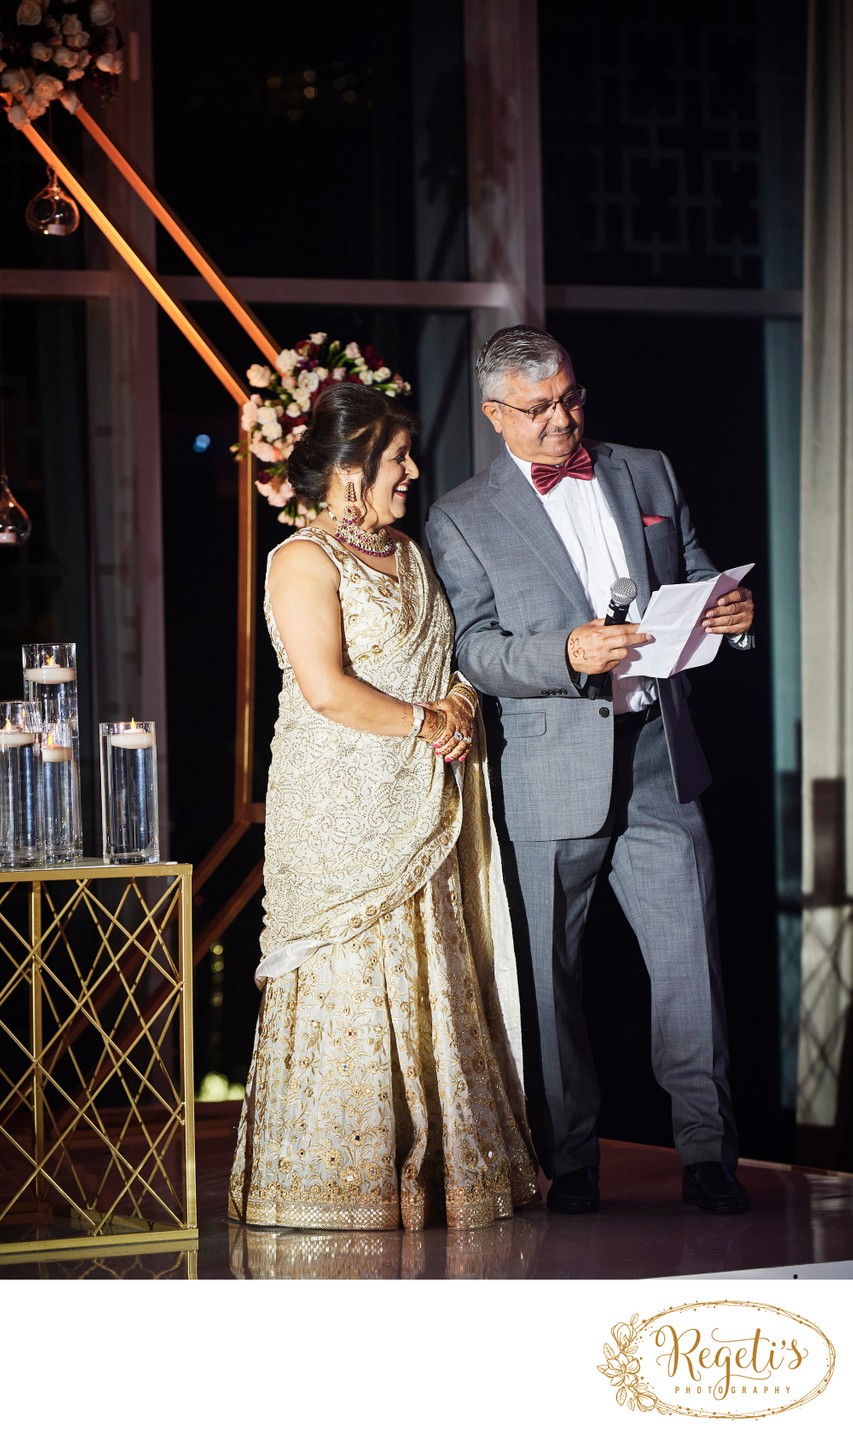 Anuj and Shruthi’s Destination Wedding Reception